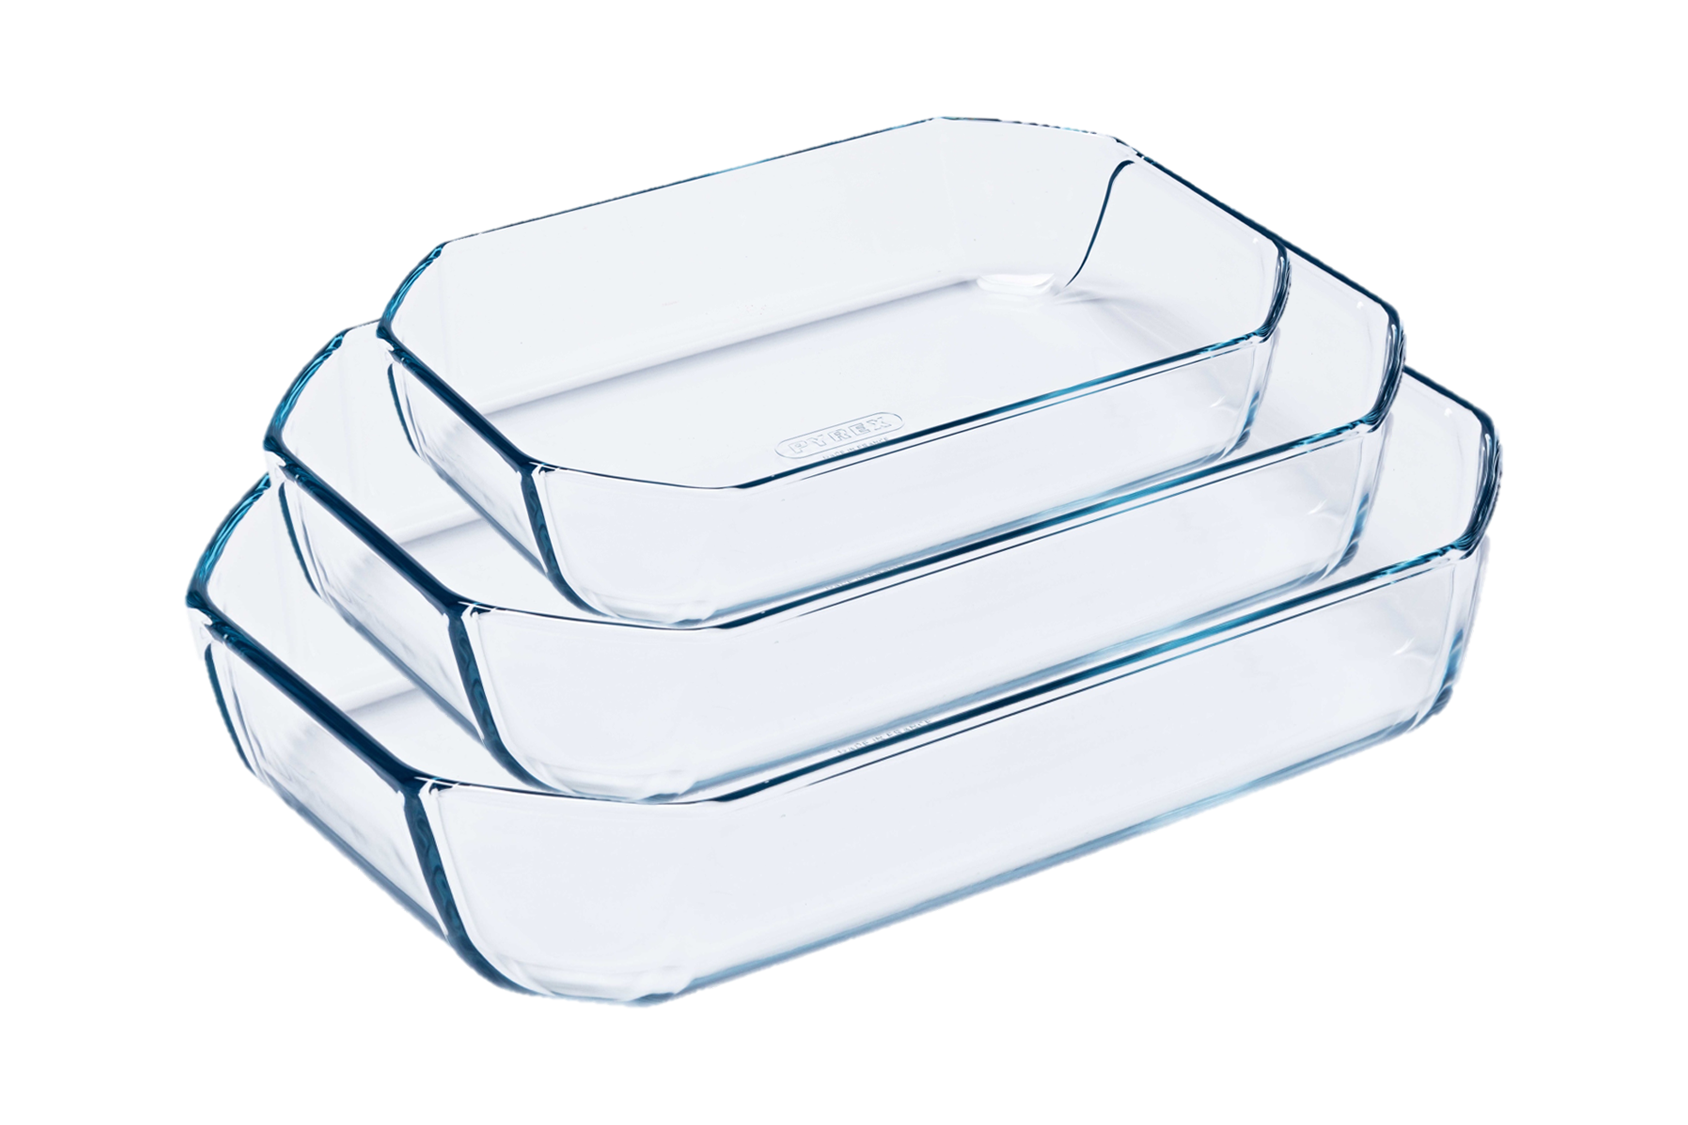 Set of 3 rectangular glass oven dishes - Inspiration